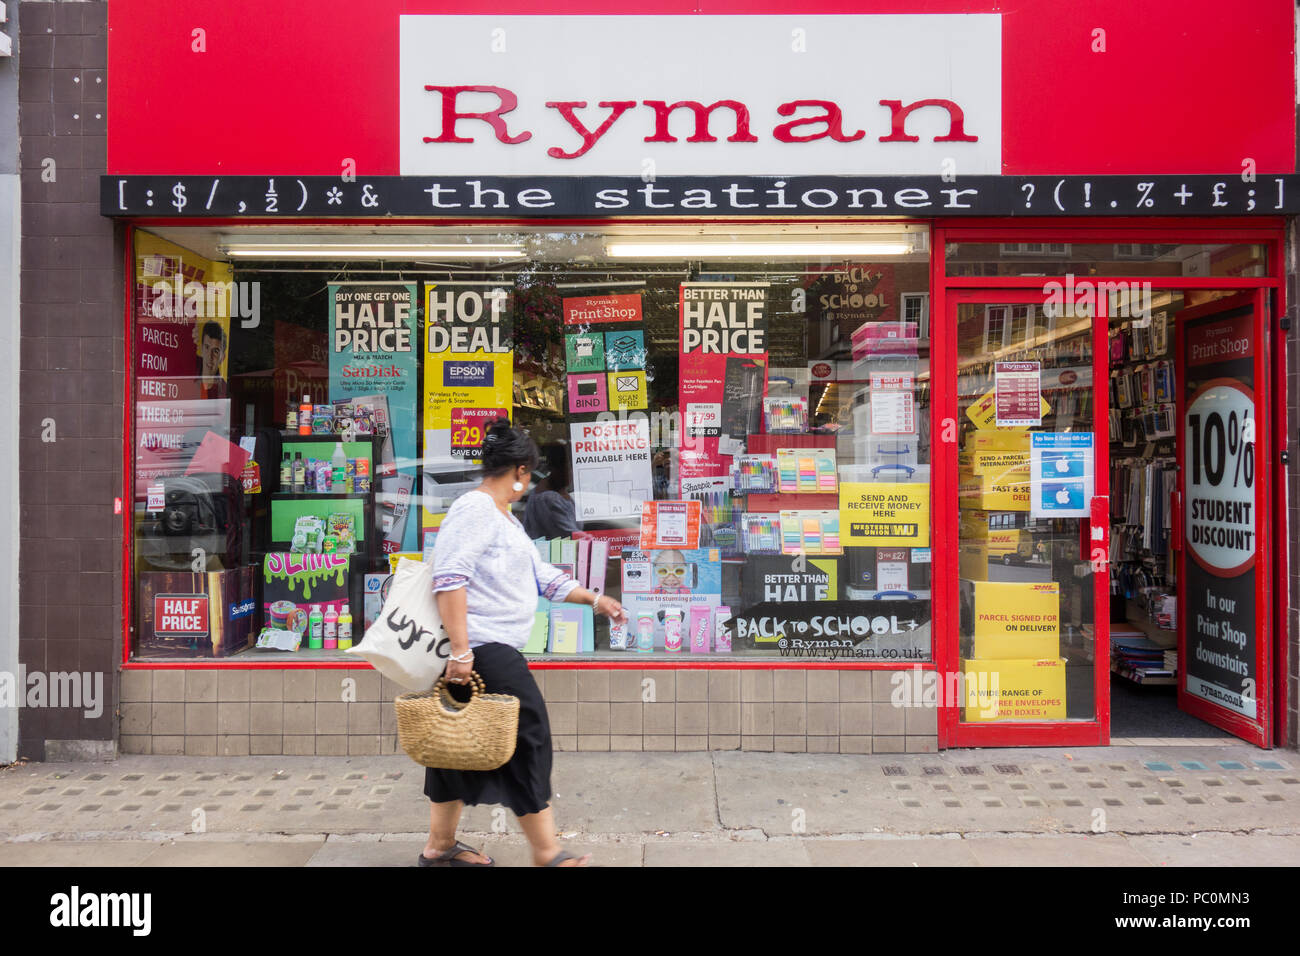 Ryman the stationer on Kensington High Street, London, UK Stock Photo